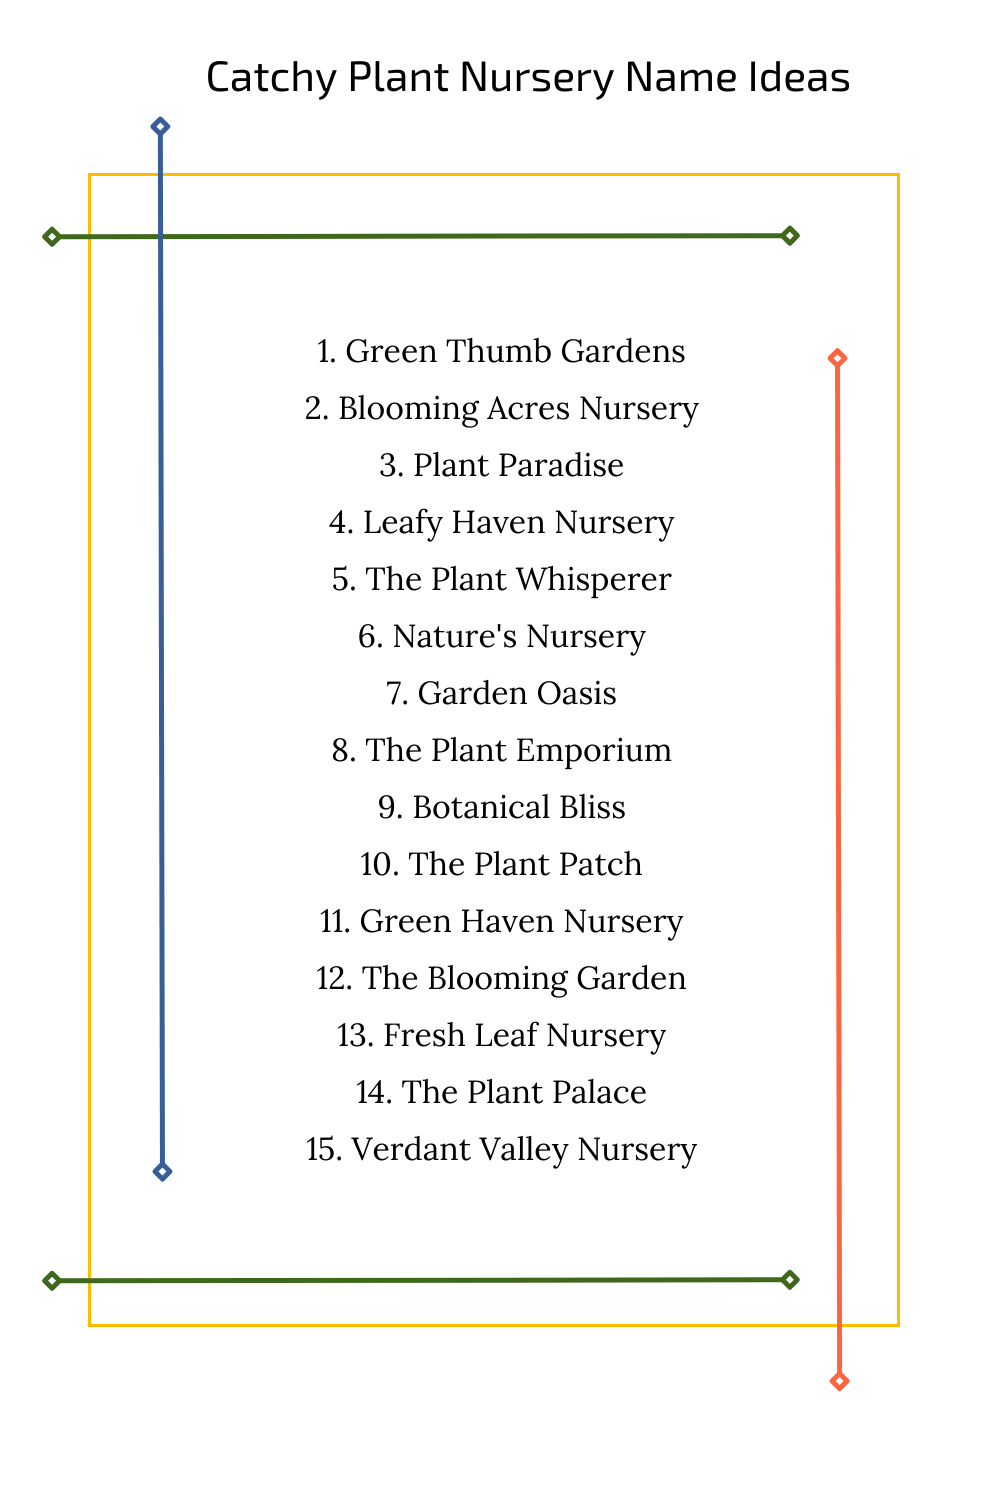 Catchy Plant Nursery Name Ideas